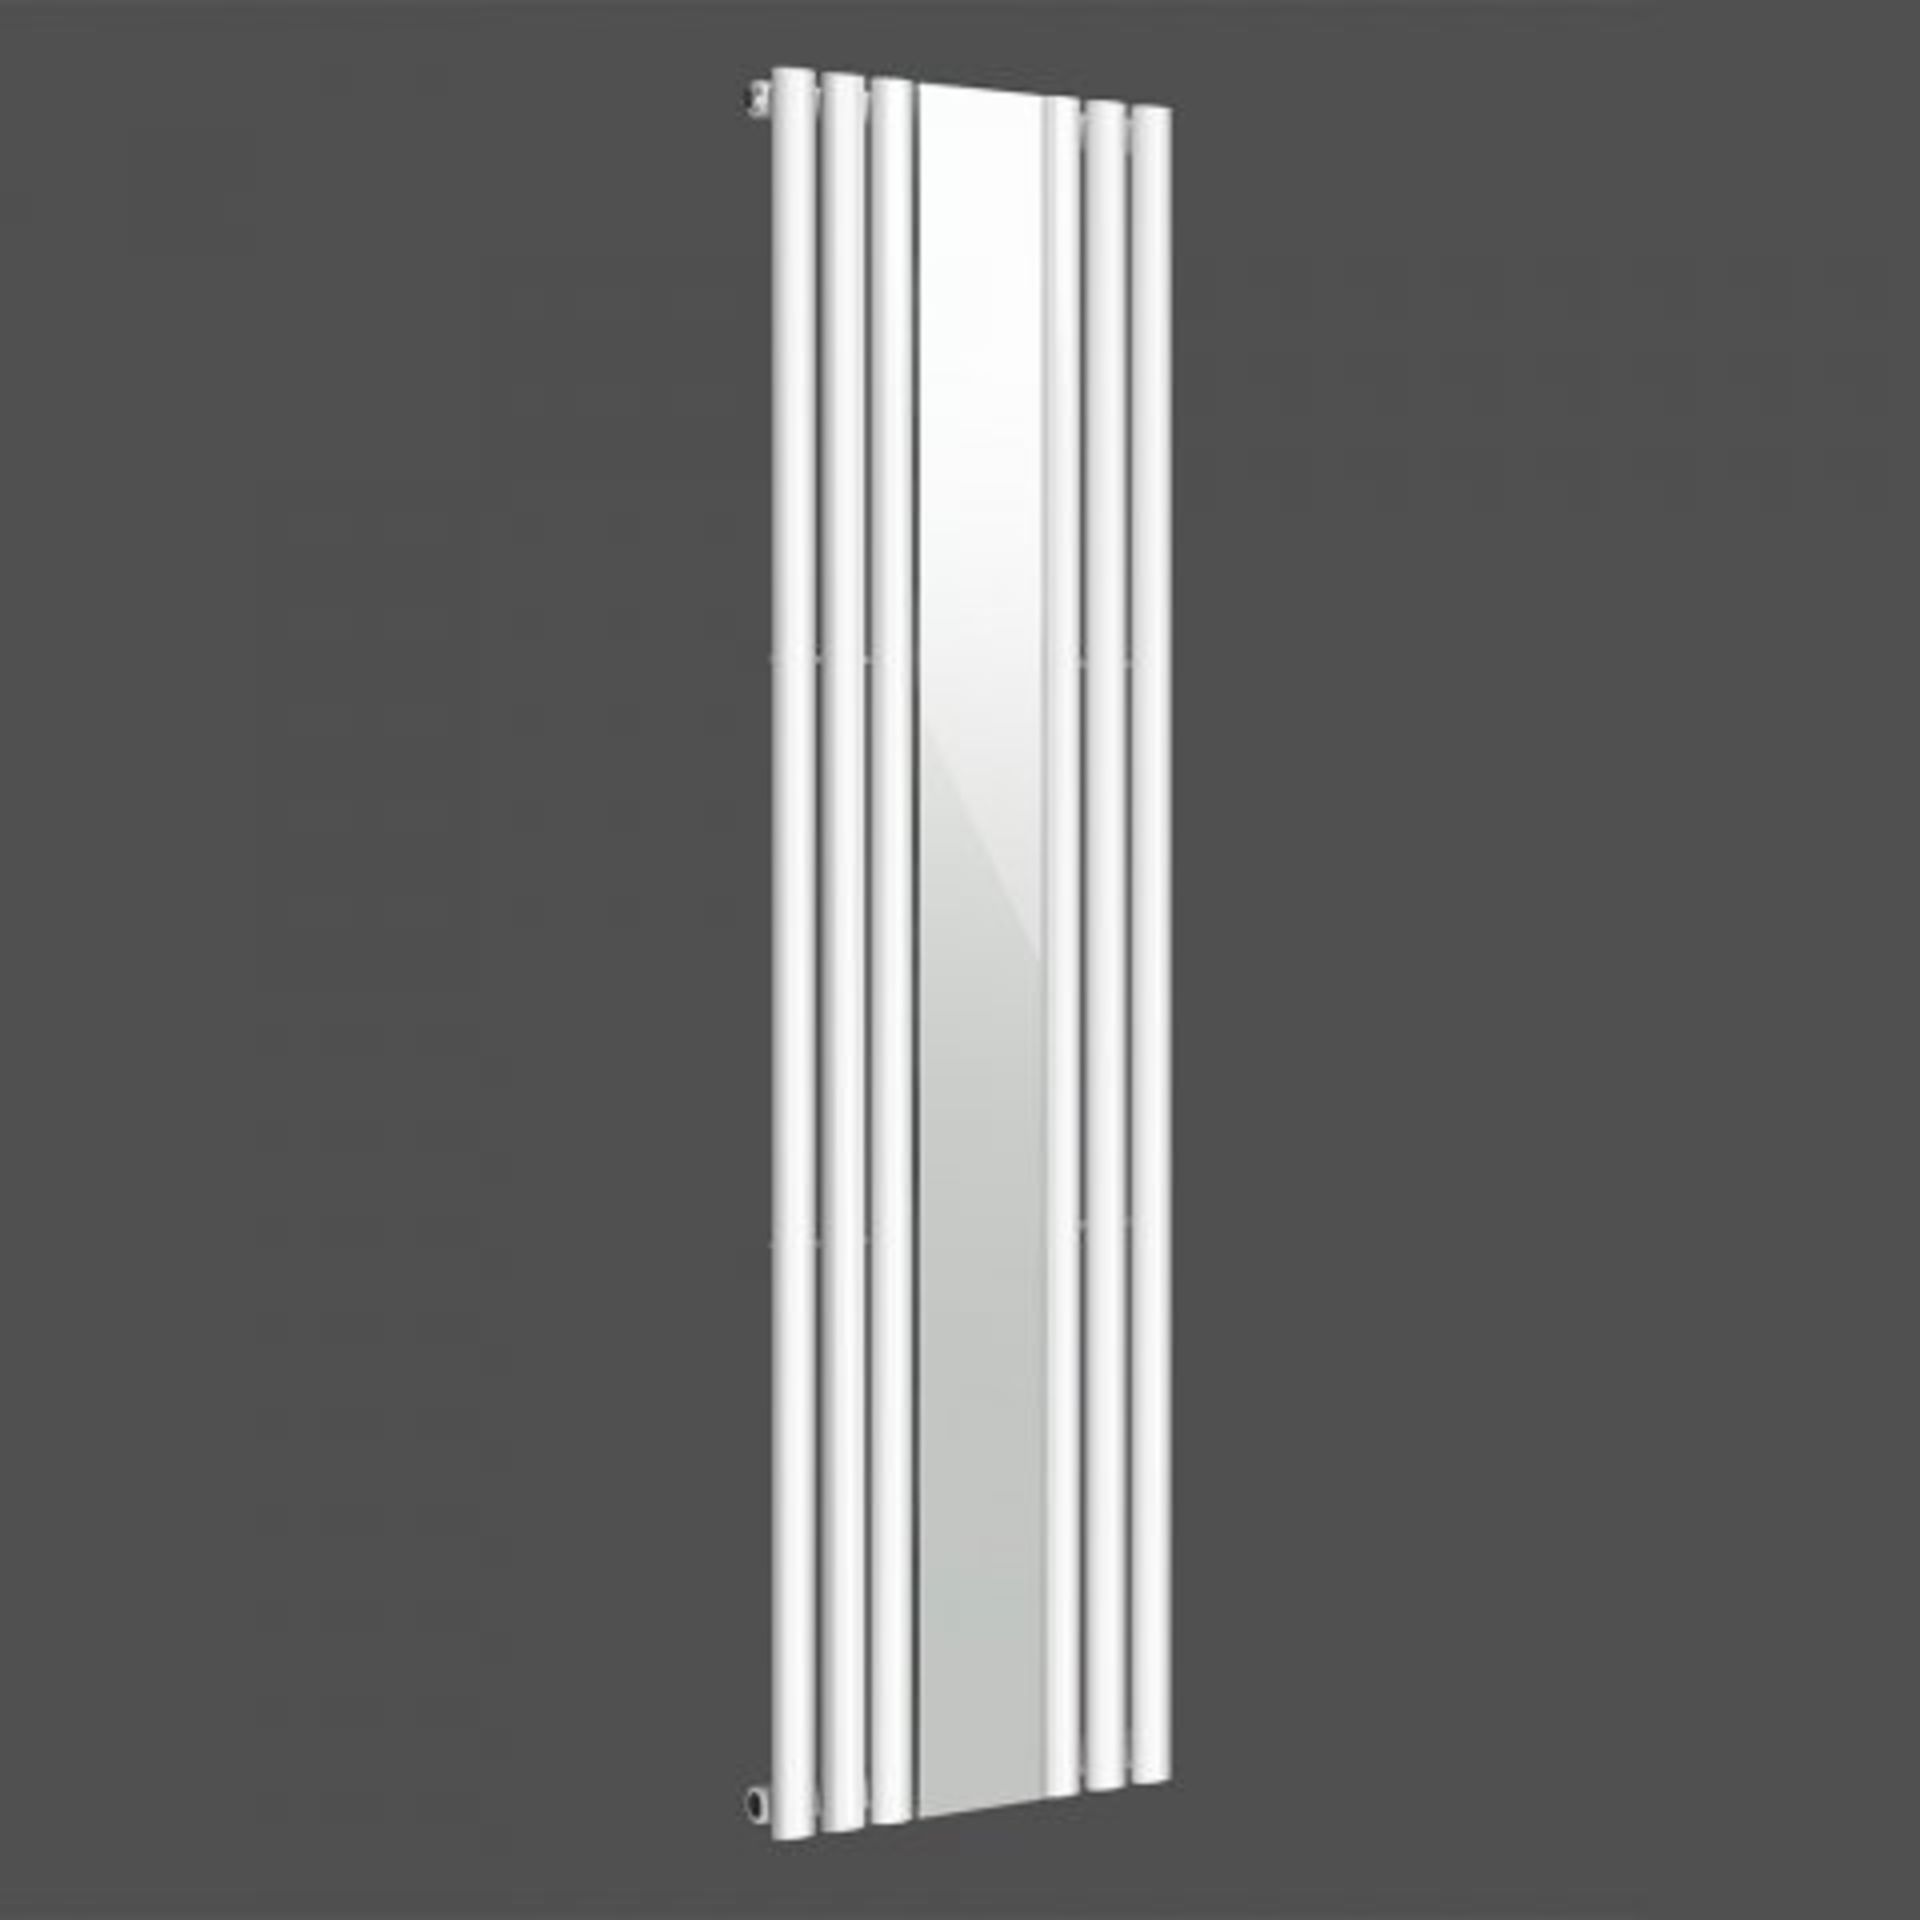 (A505) 1800x380mm White Triple Panel Vertical Colosseum Radiator - Roma Premium. RRP £499.99. - Image 3 of 4